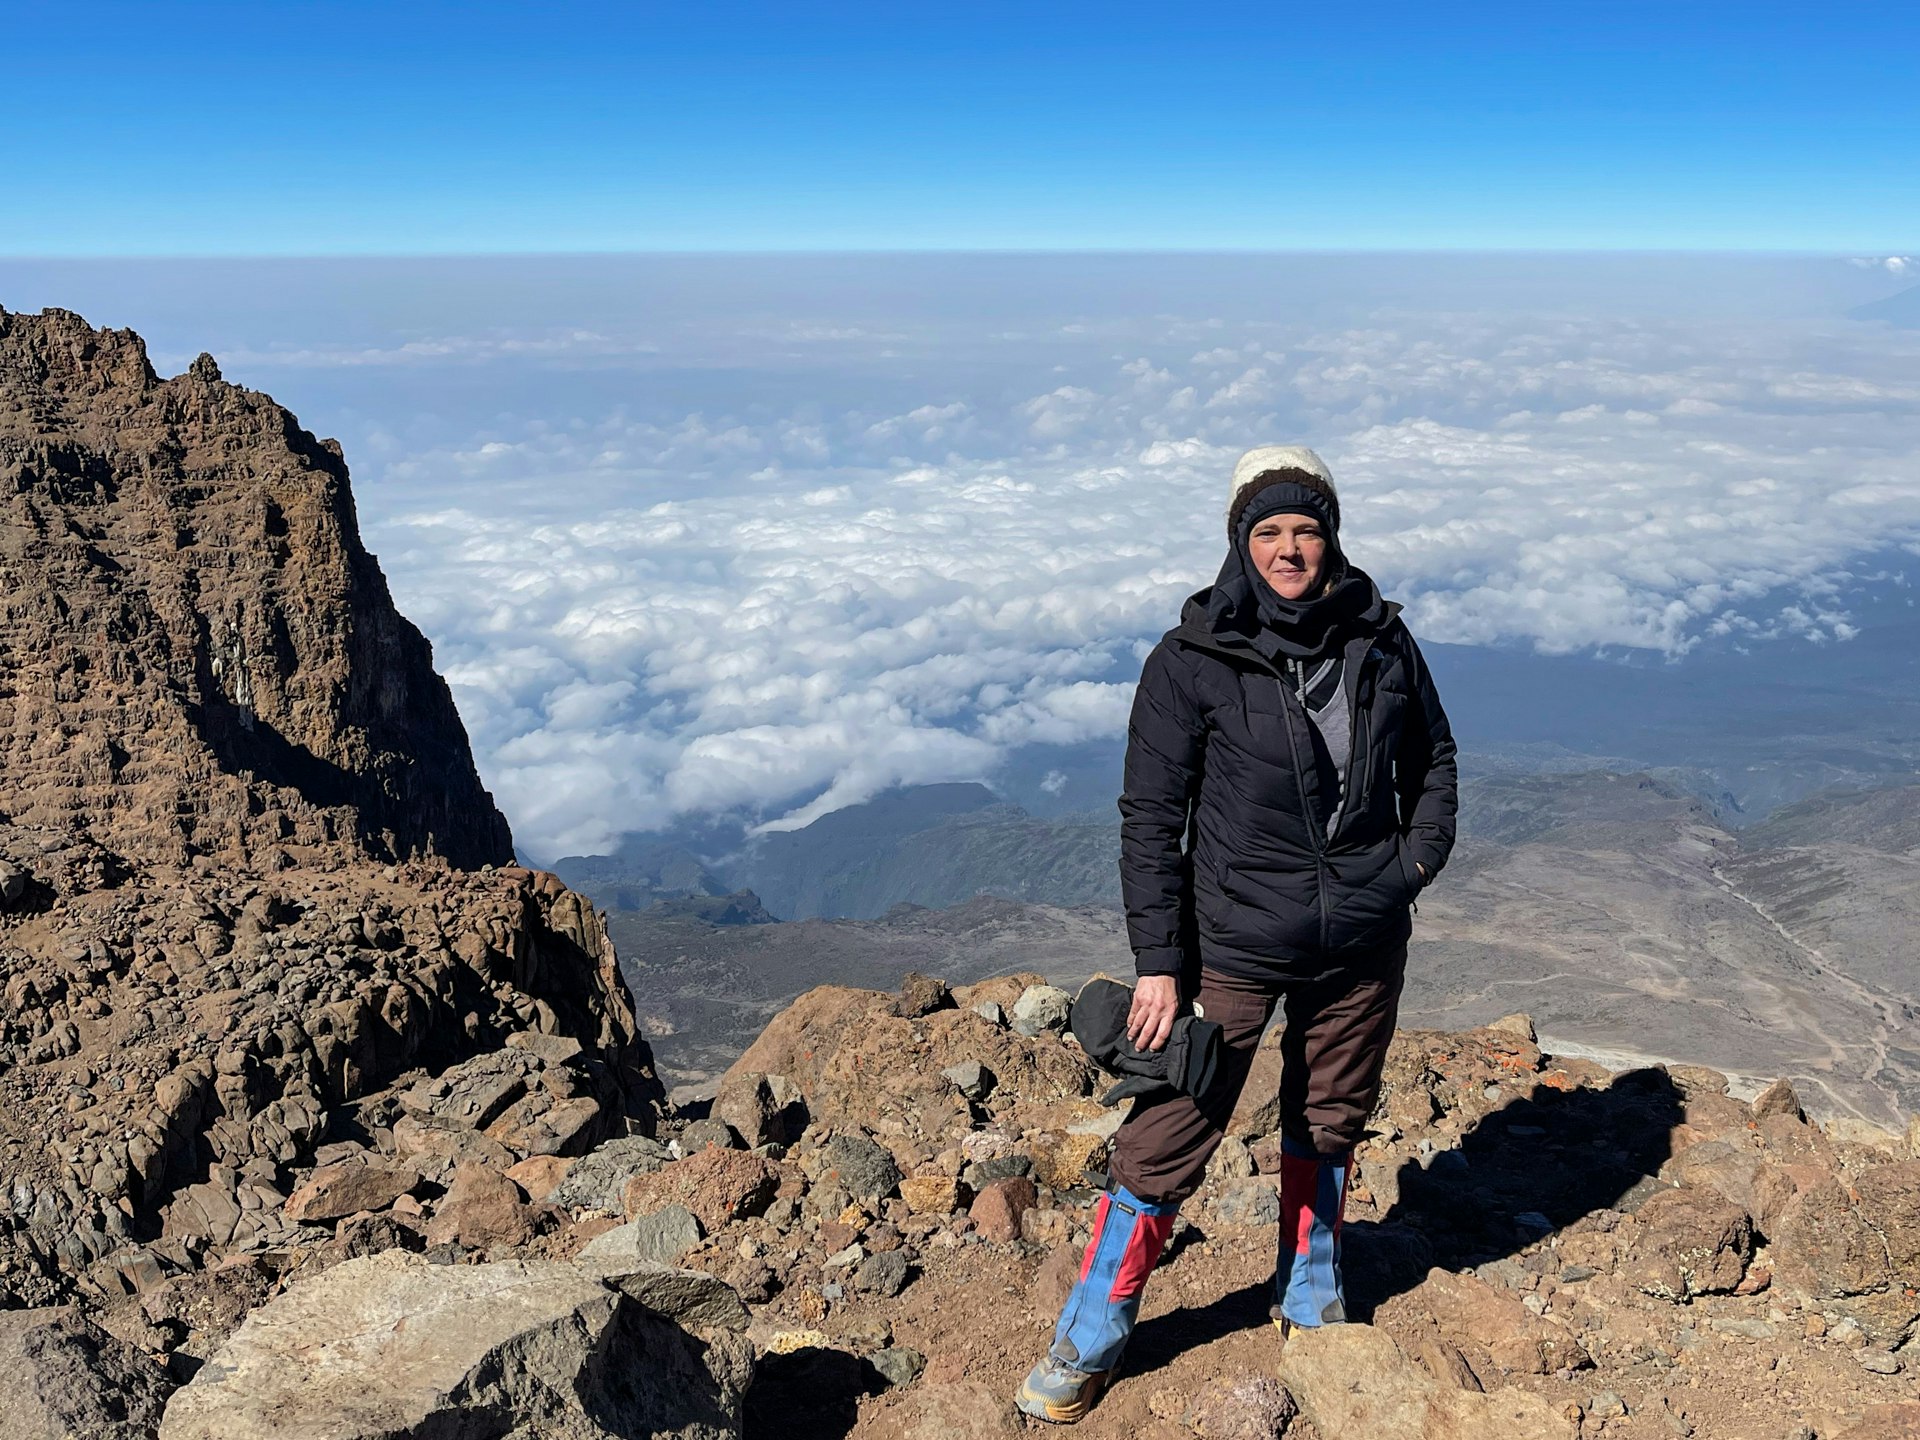 Writer Amanda McCadams on her way to the top of Mt. Kilimanjaro